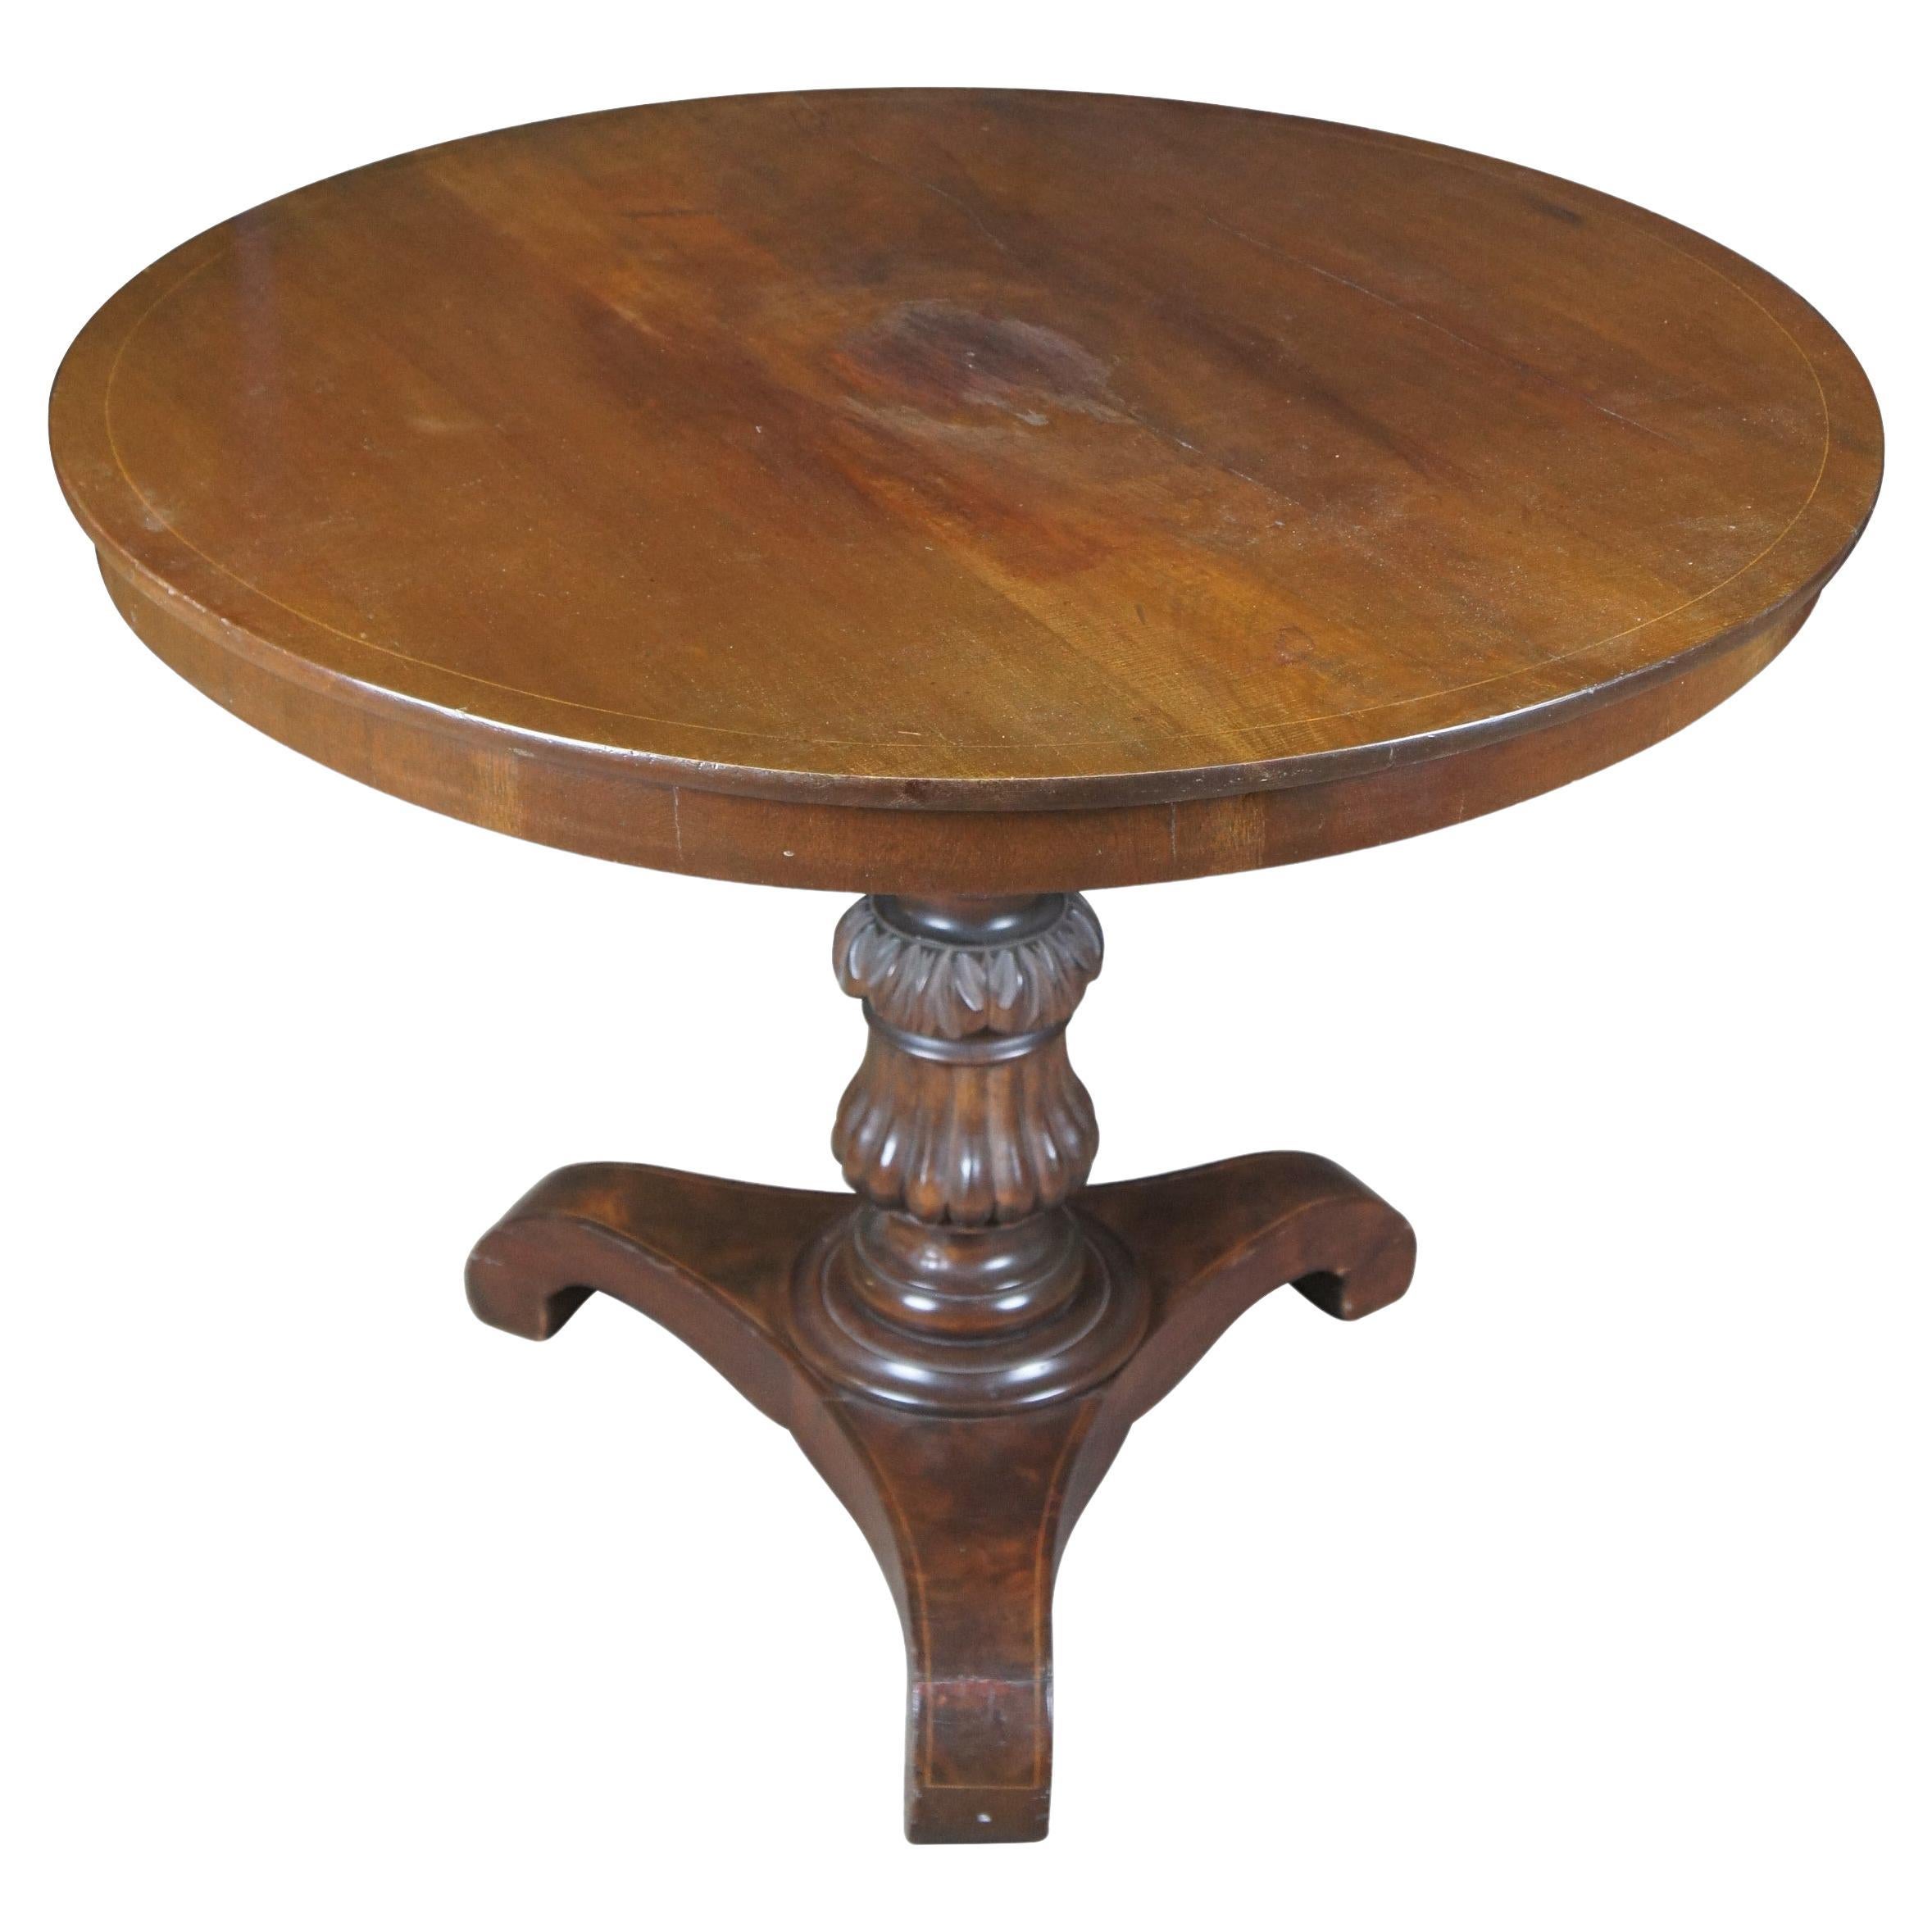 Antique German Biedermeier Mahogany Inlaid Round Center Pedestal Table 36"